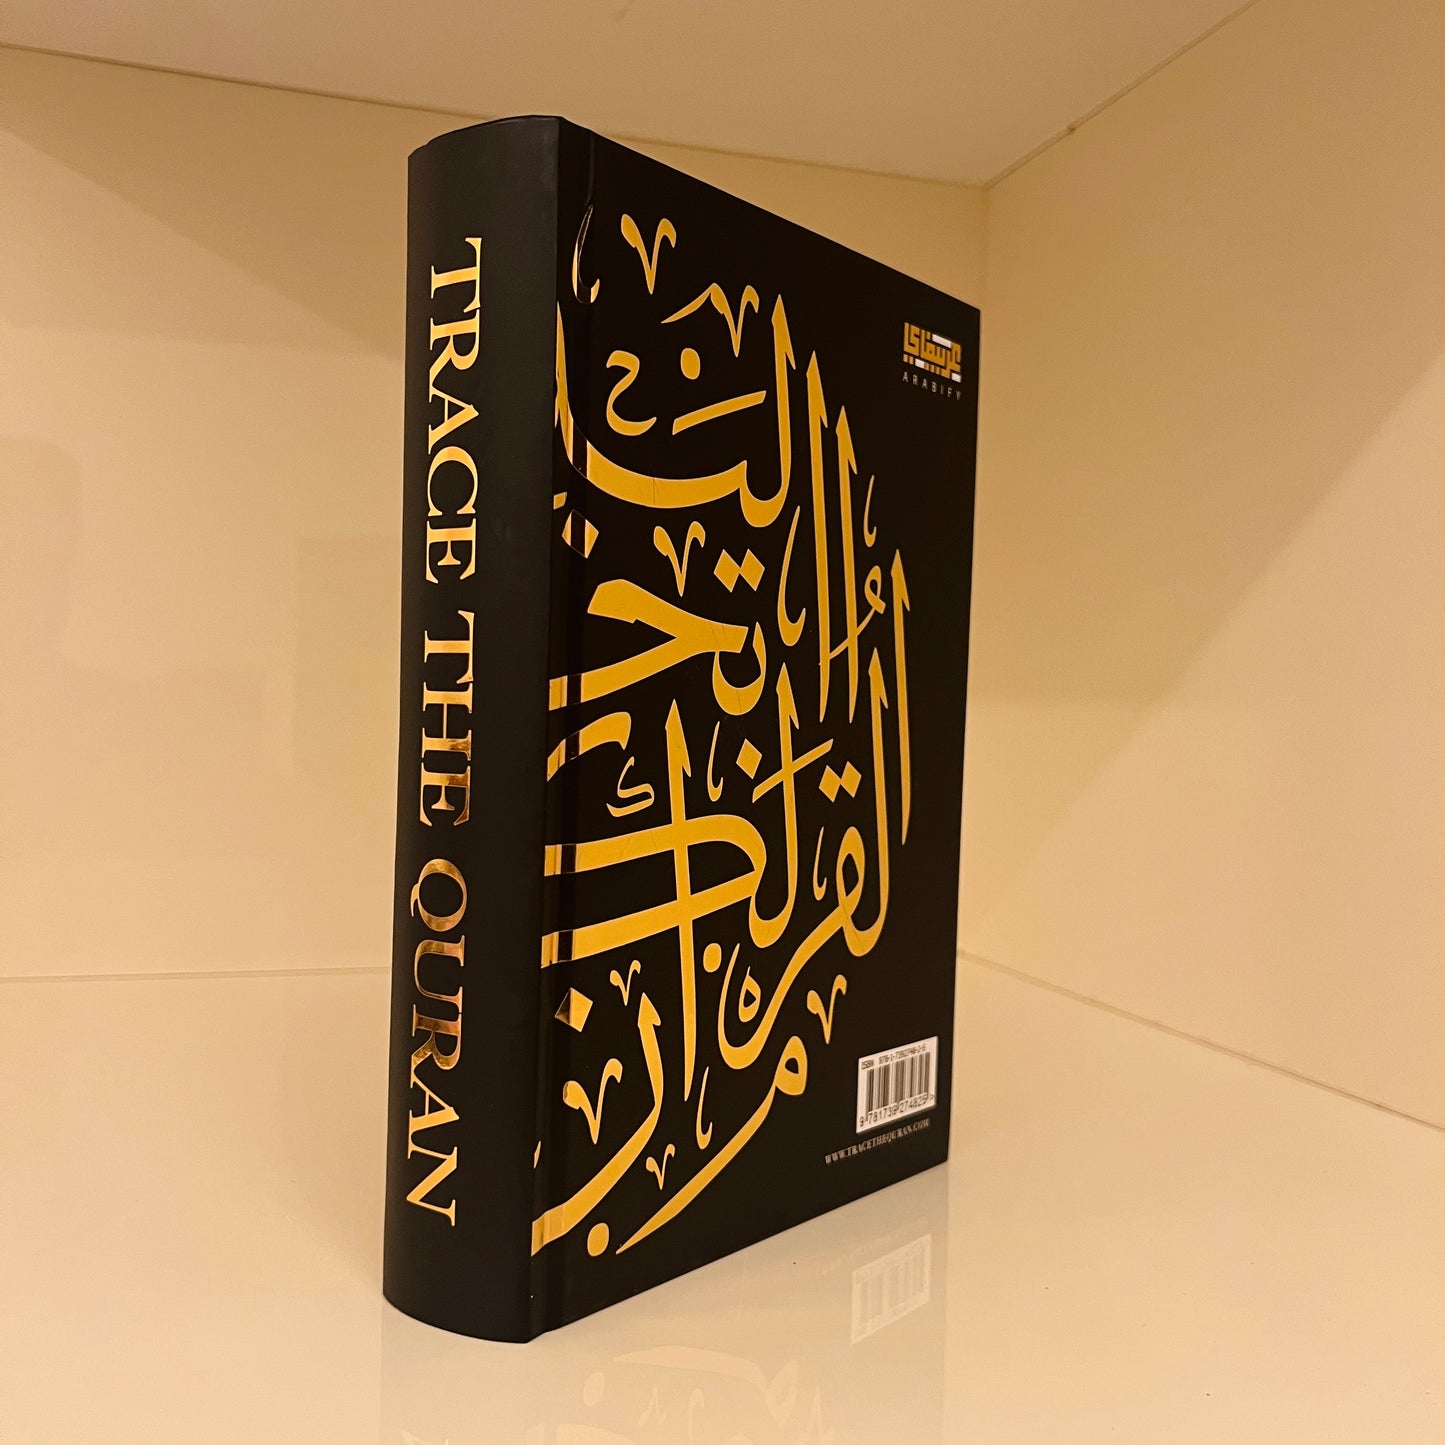 Trace The Quran - Black Edition